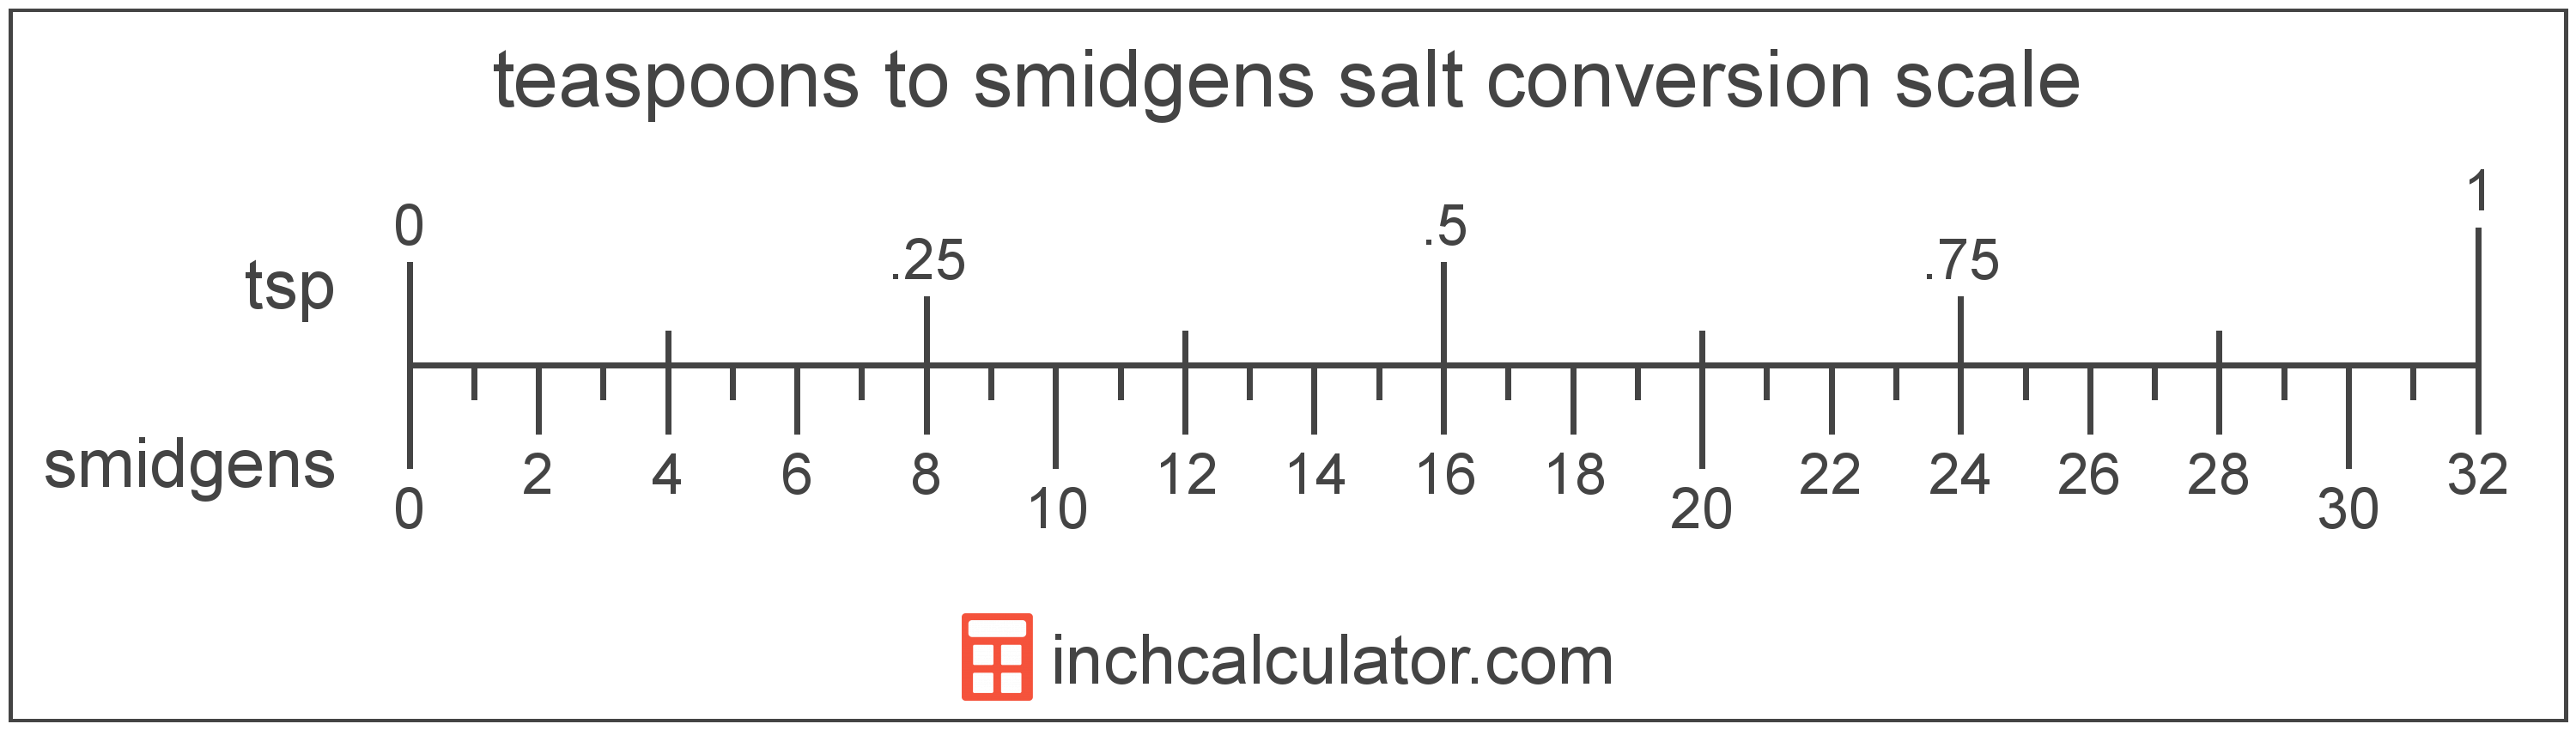 conversion scale showing teaspoons and equivalent smidgens salt volume values